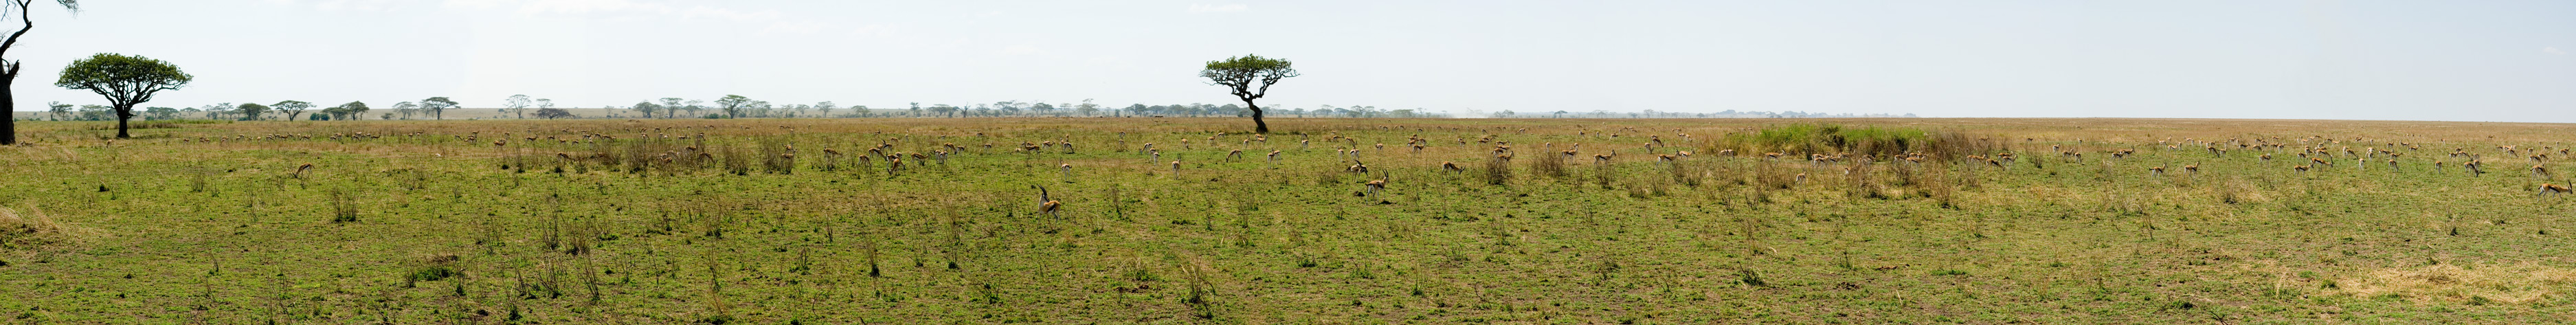 Gazelles in the
              Serengeti